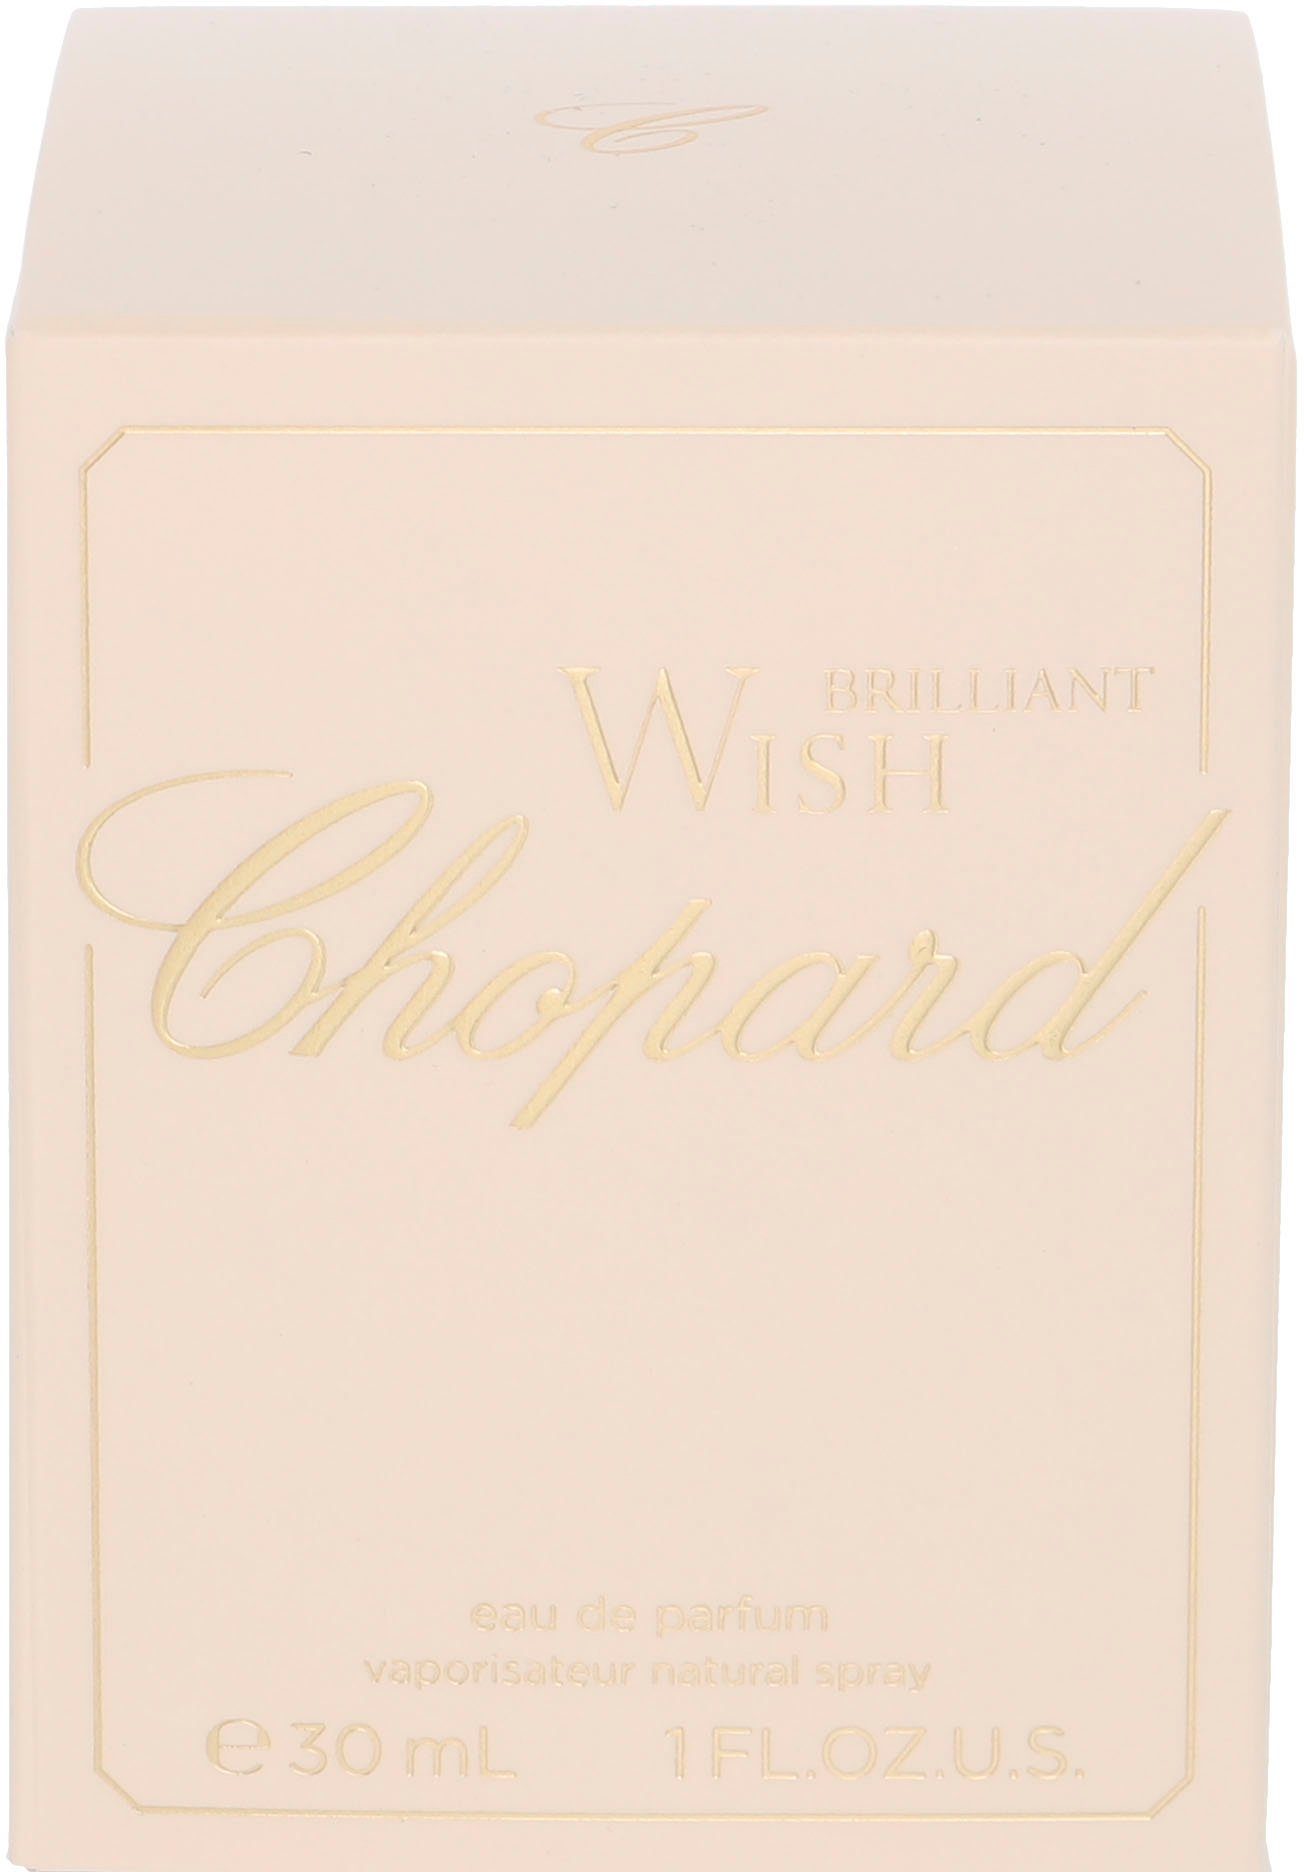 Wish Brilliant Chopard de Eau Chopard Parfum